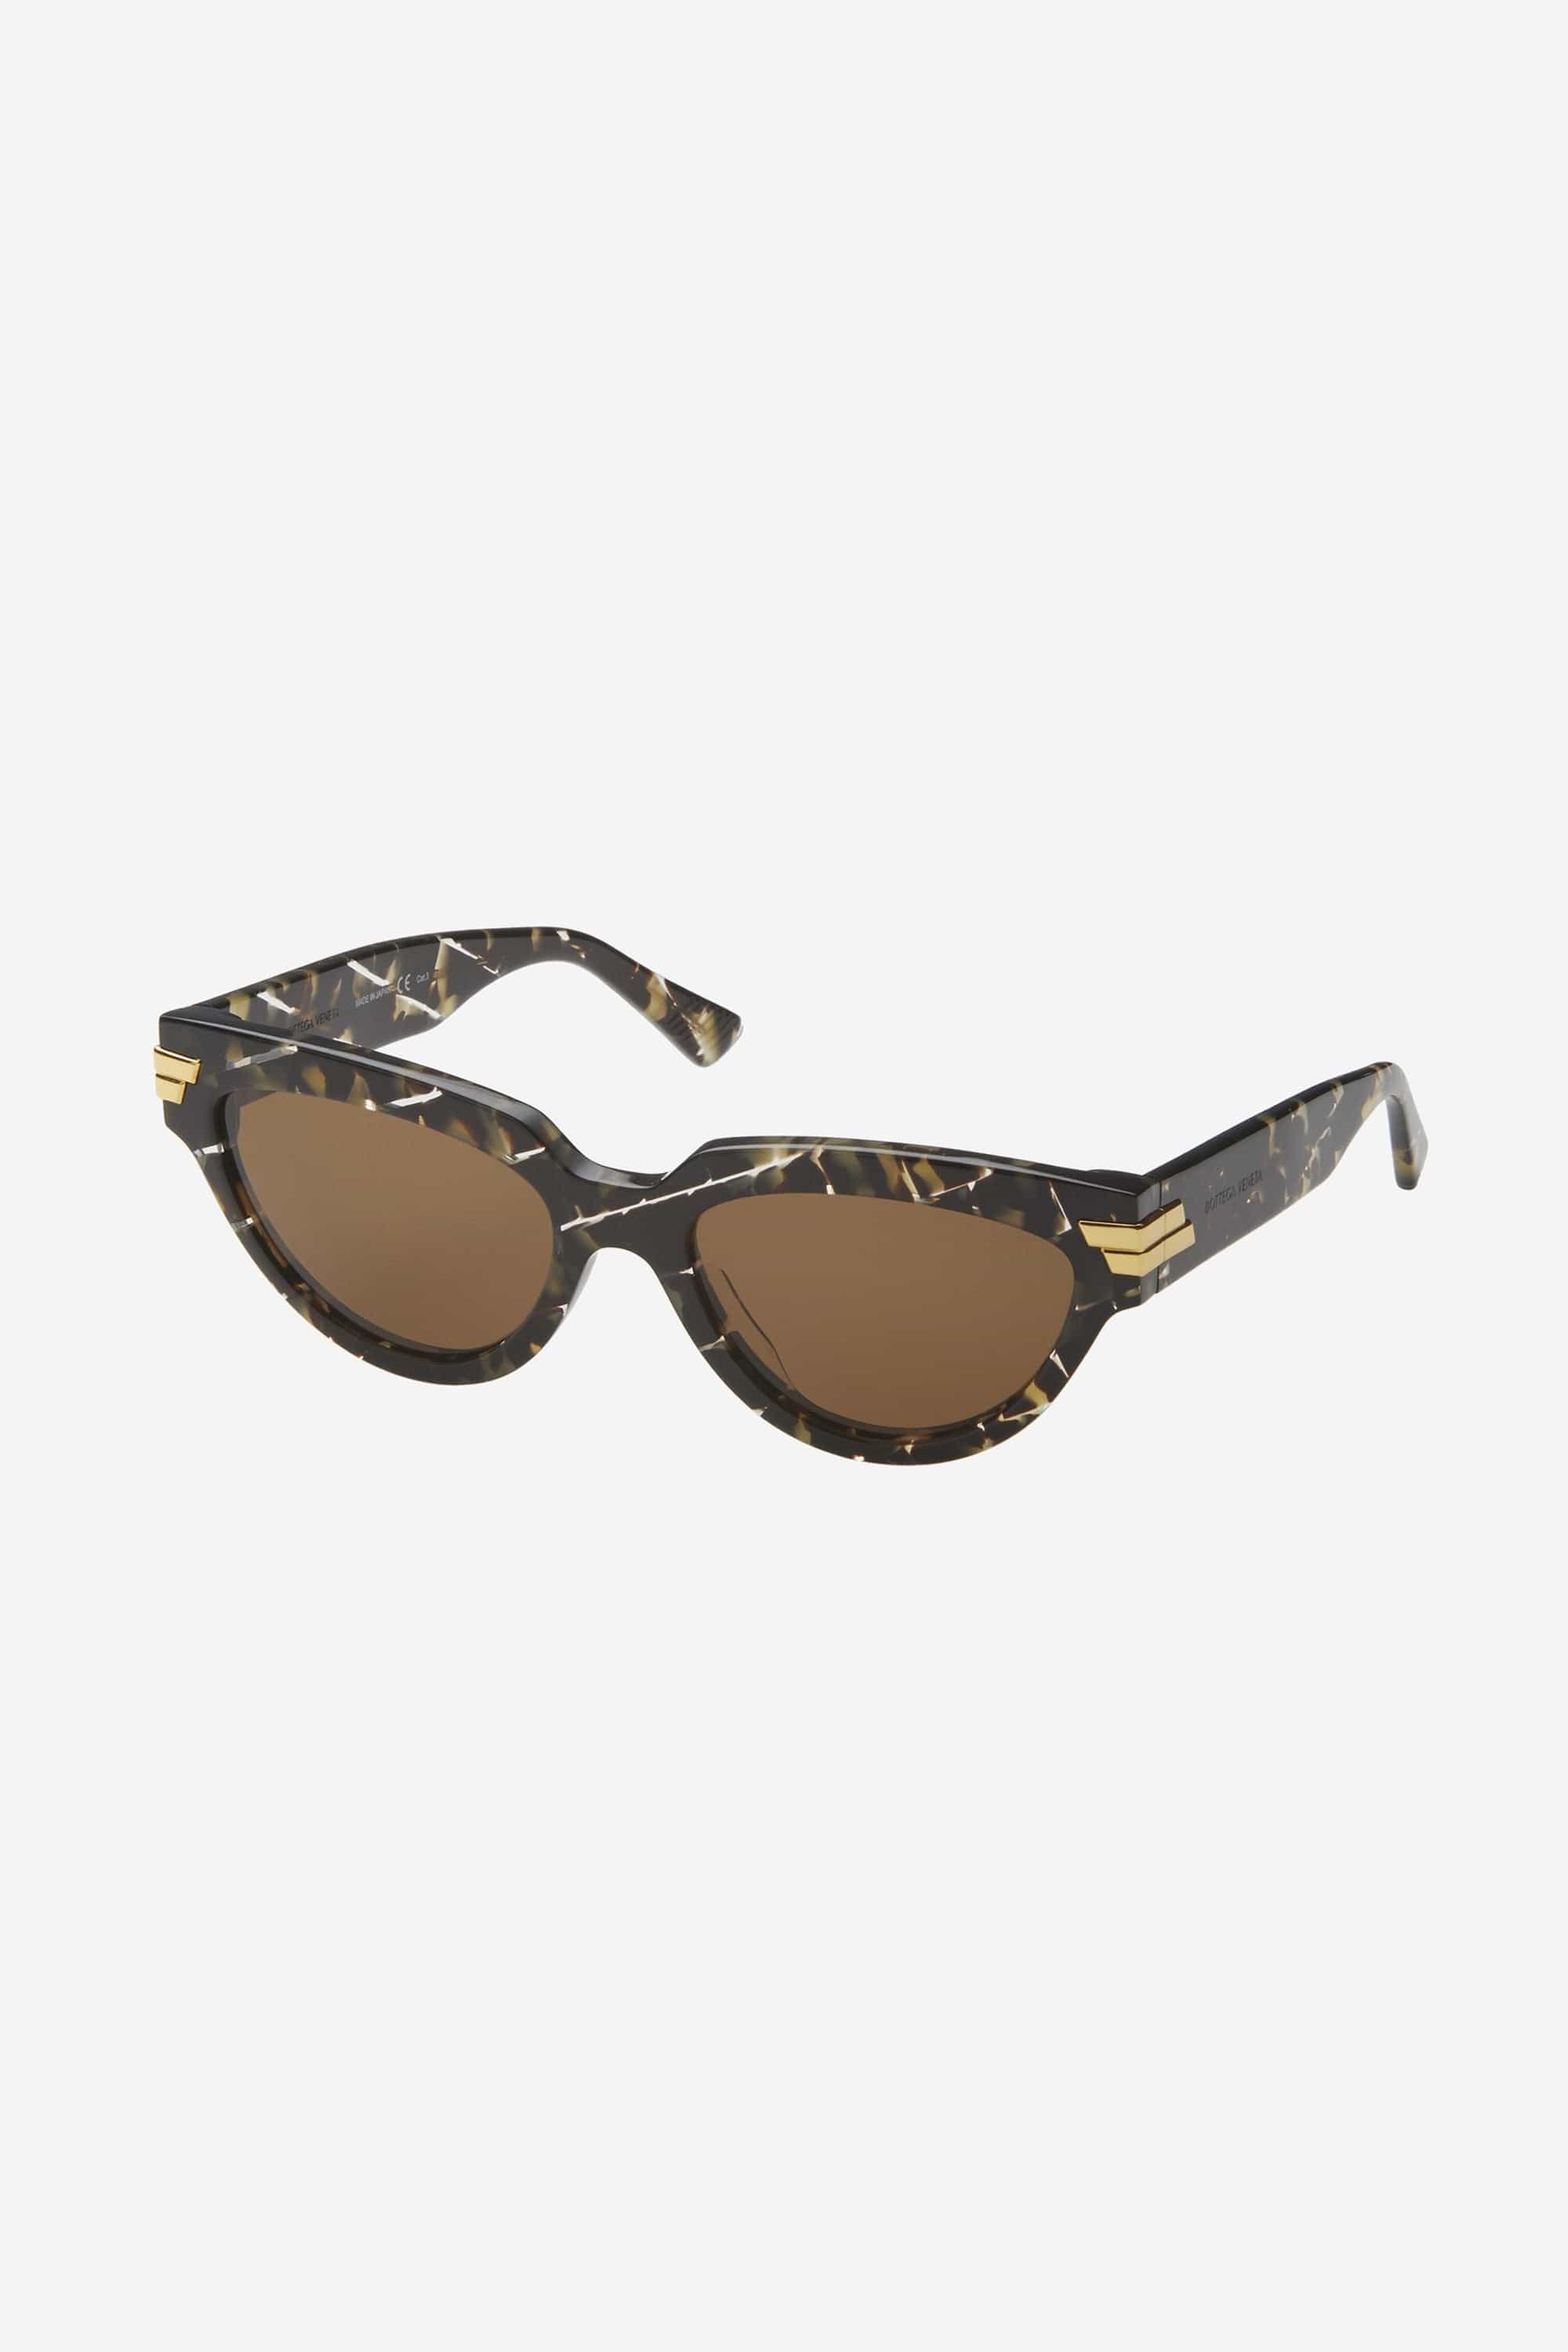 Bottega Veneta soft cat-eye havana sunglasses - Eyewear Club